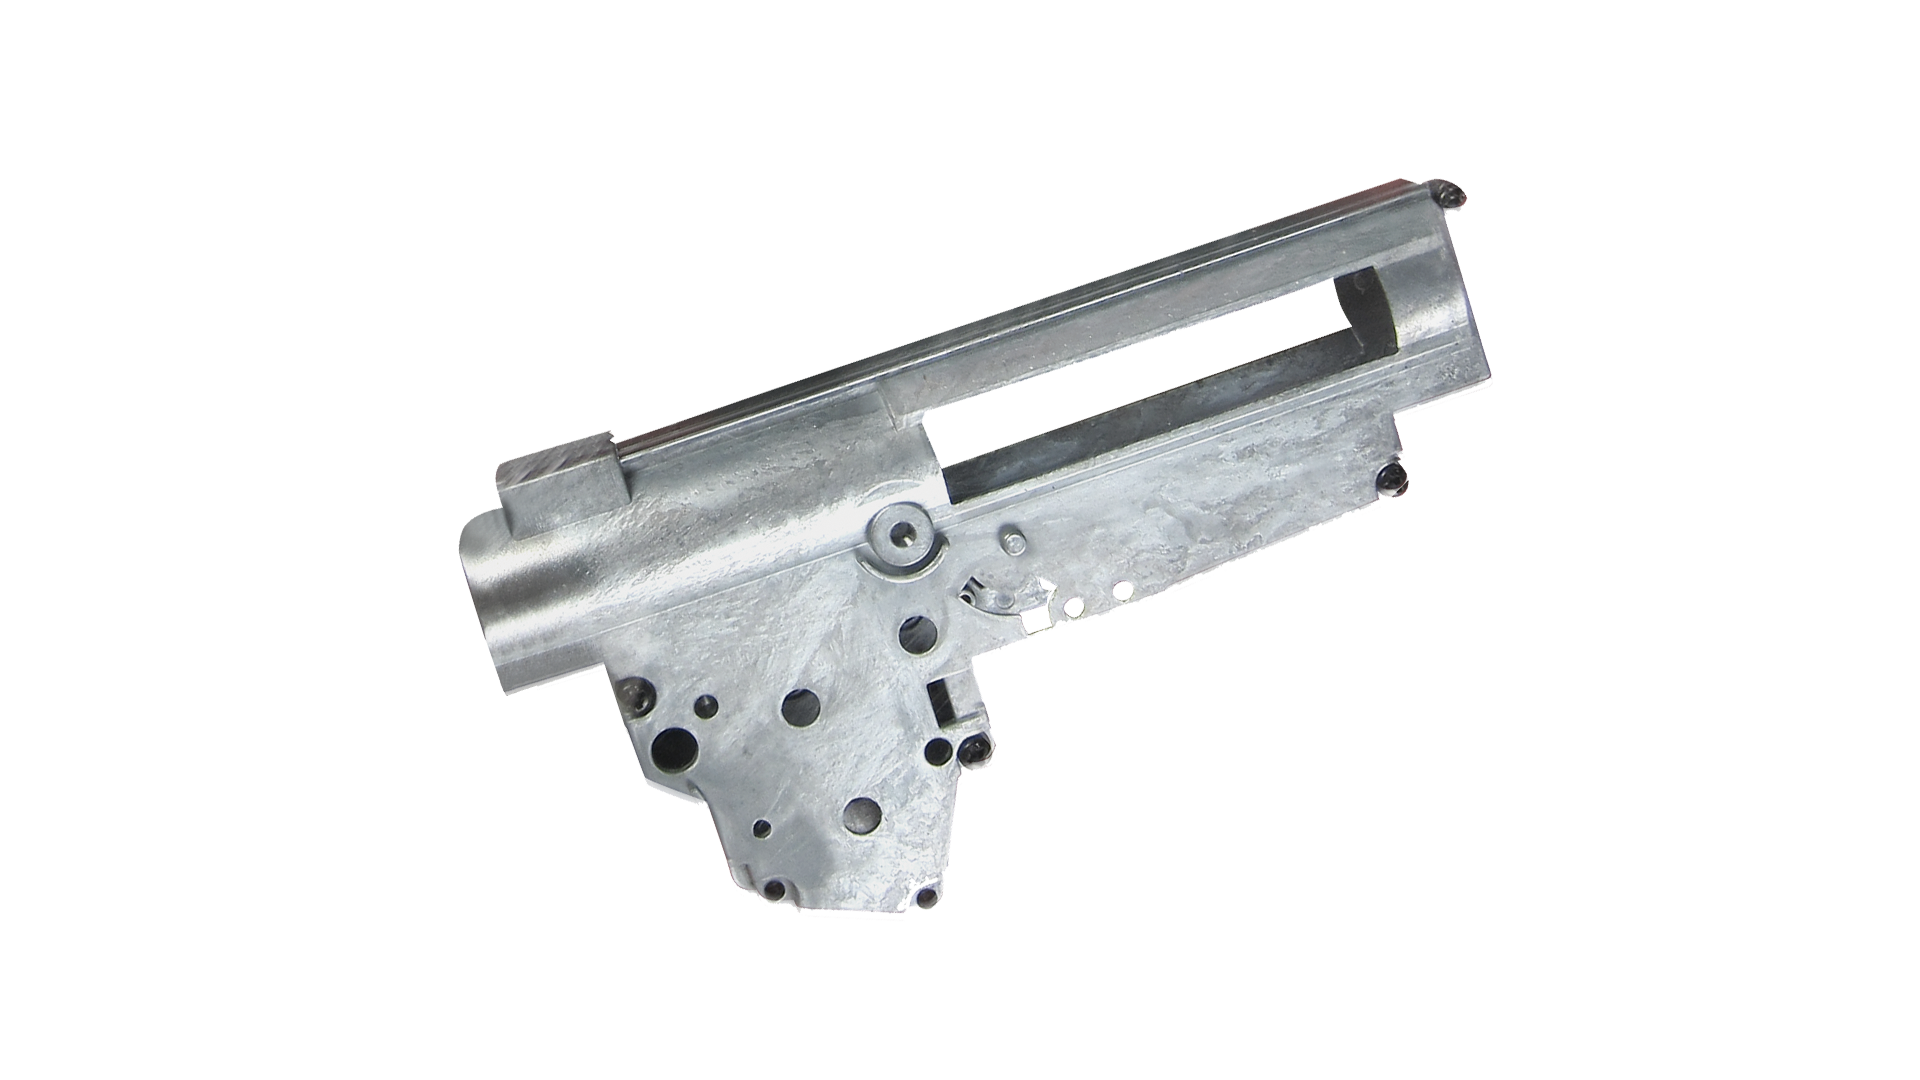 【MK-118】Ver.3 8mm Bushing Gearbox Shell (Incl. Screws)